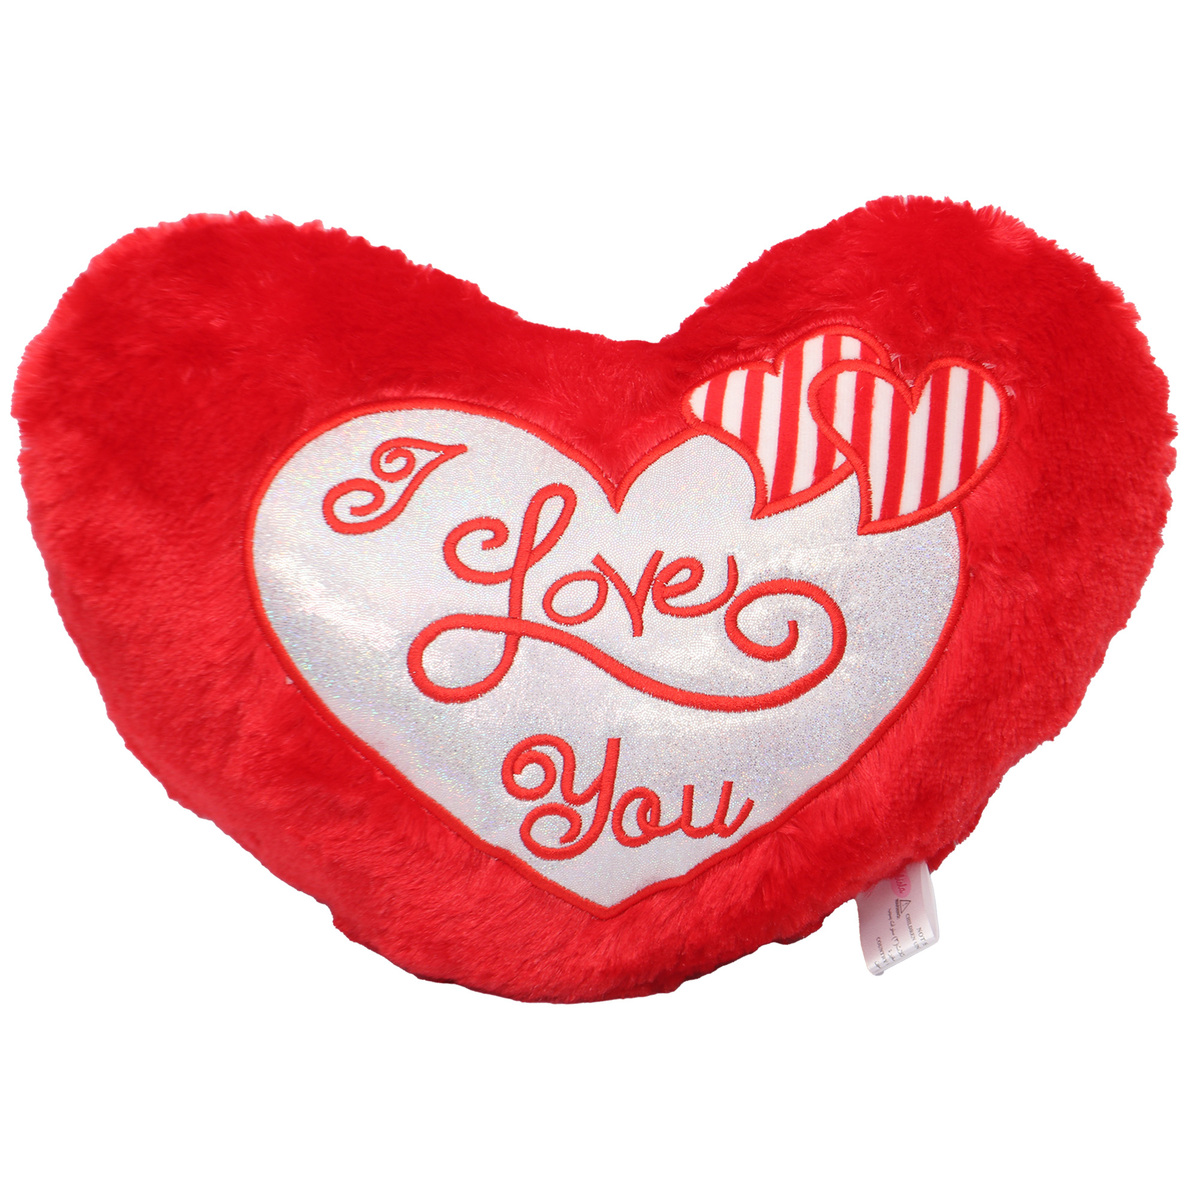 Fabiola Soft Heart Plush 40cm LJ1195-2 Assorted